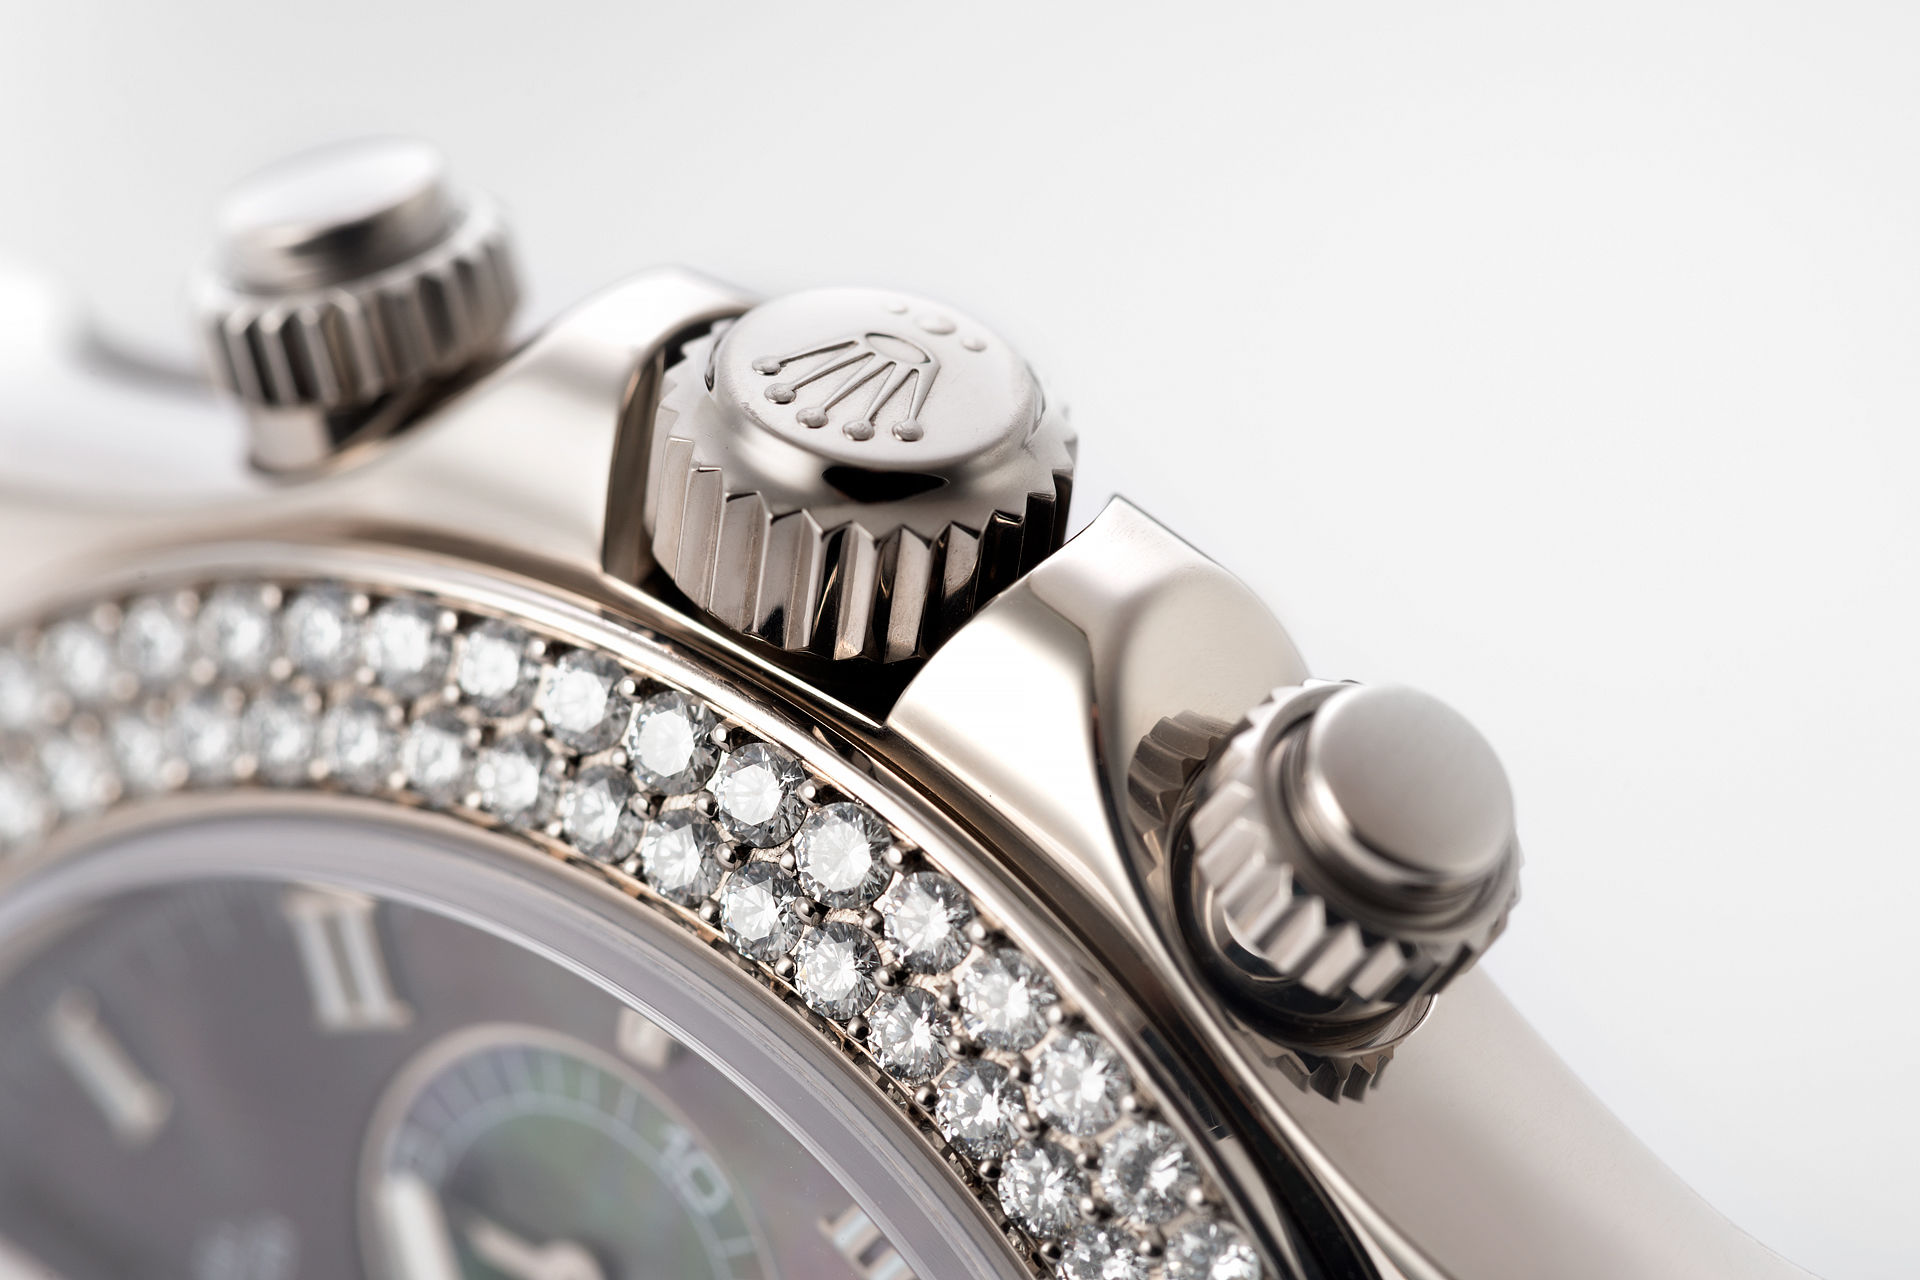 ref 116589RBR | 18ct White Gold 'Diamond Bezel' | Rolex Cosmograph Daytona